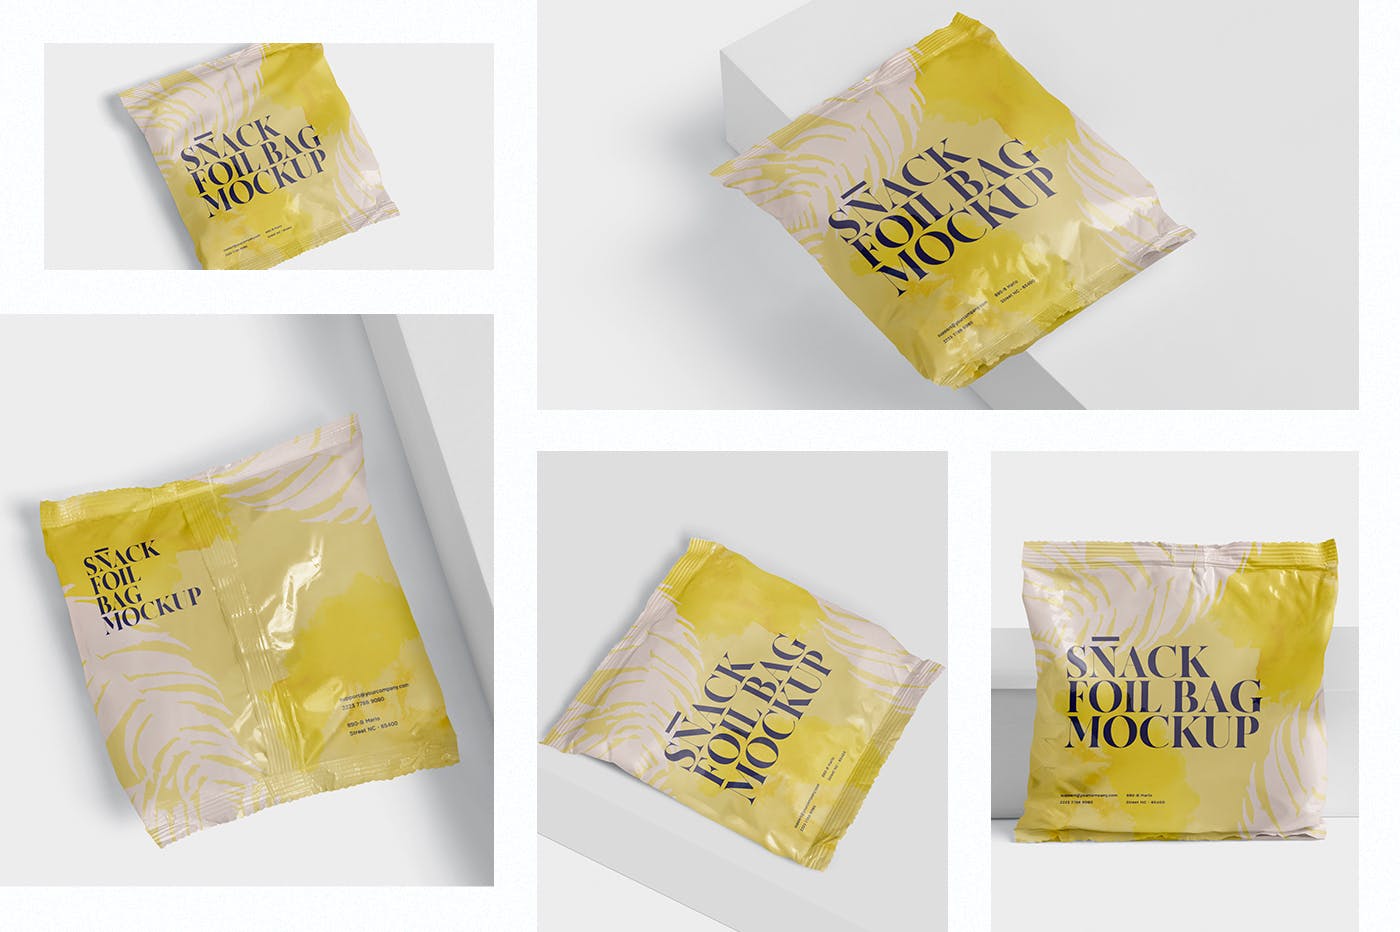 小吃零食铝箔包装袋设计图素材库精选 Snack Foil Bag Mockup – Square Size – Small插图(1)